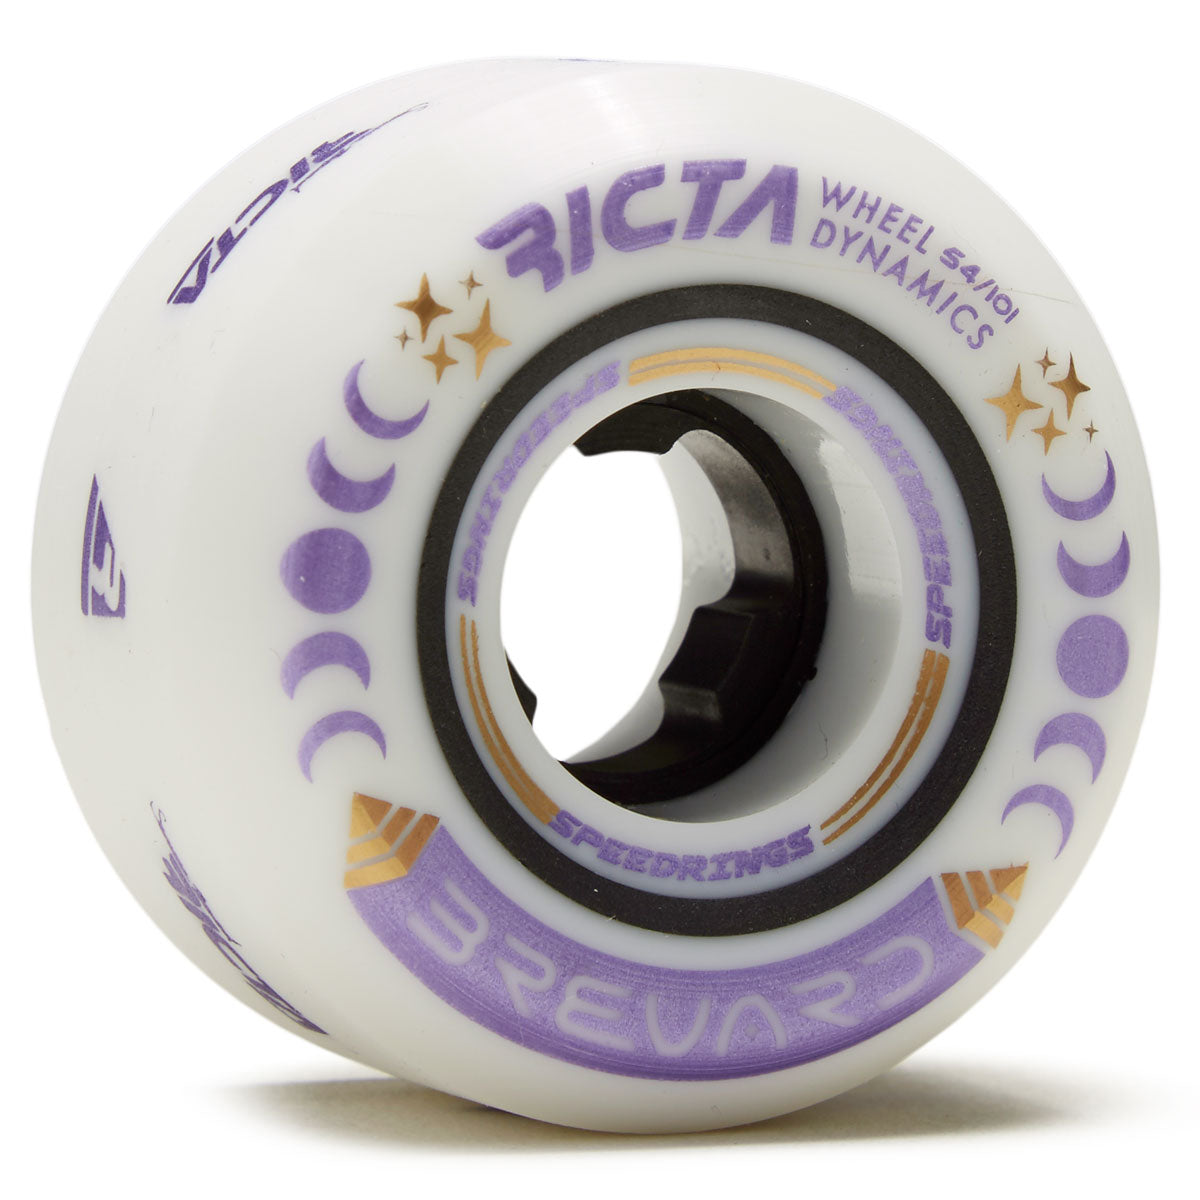 Ricta Brevard Speedrings Wide 101a Skateboard Wheels - White - 54mm image 1